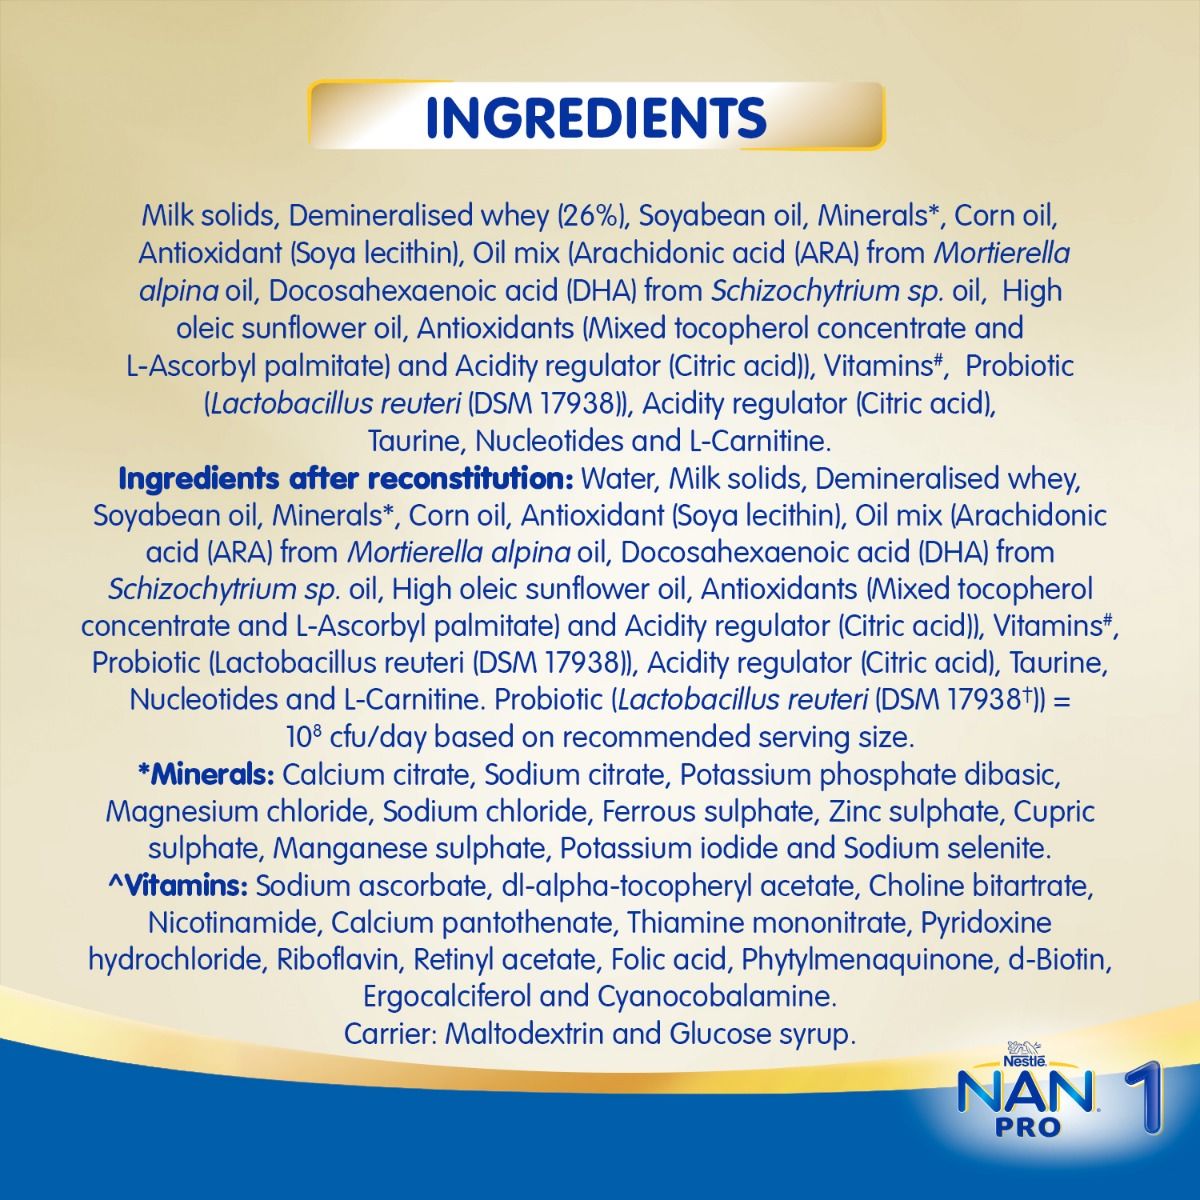 Nestle Nan Pro Infant Formula Stage 1 (Upto 6 months) Powder, 400 gm Refill Pack, Pack of 1 